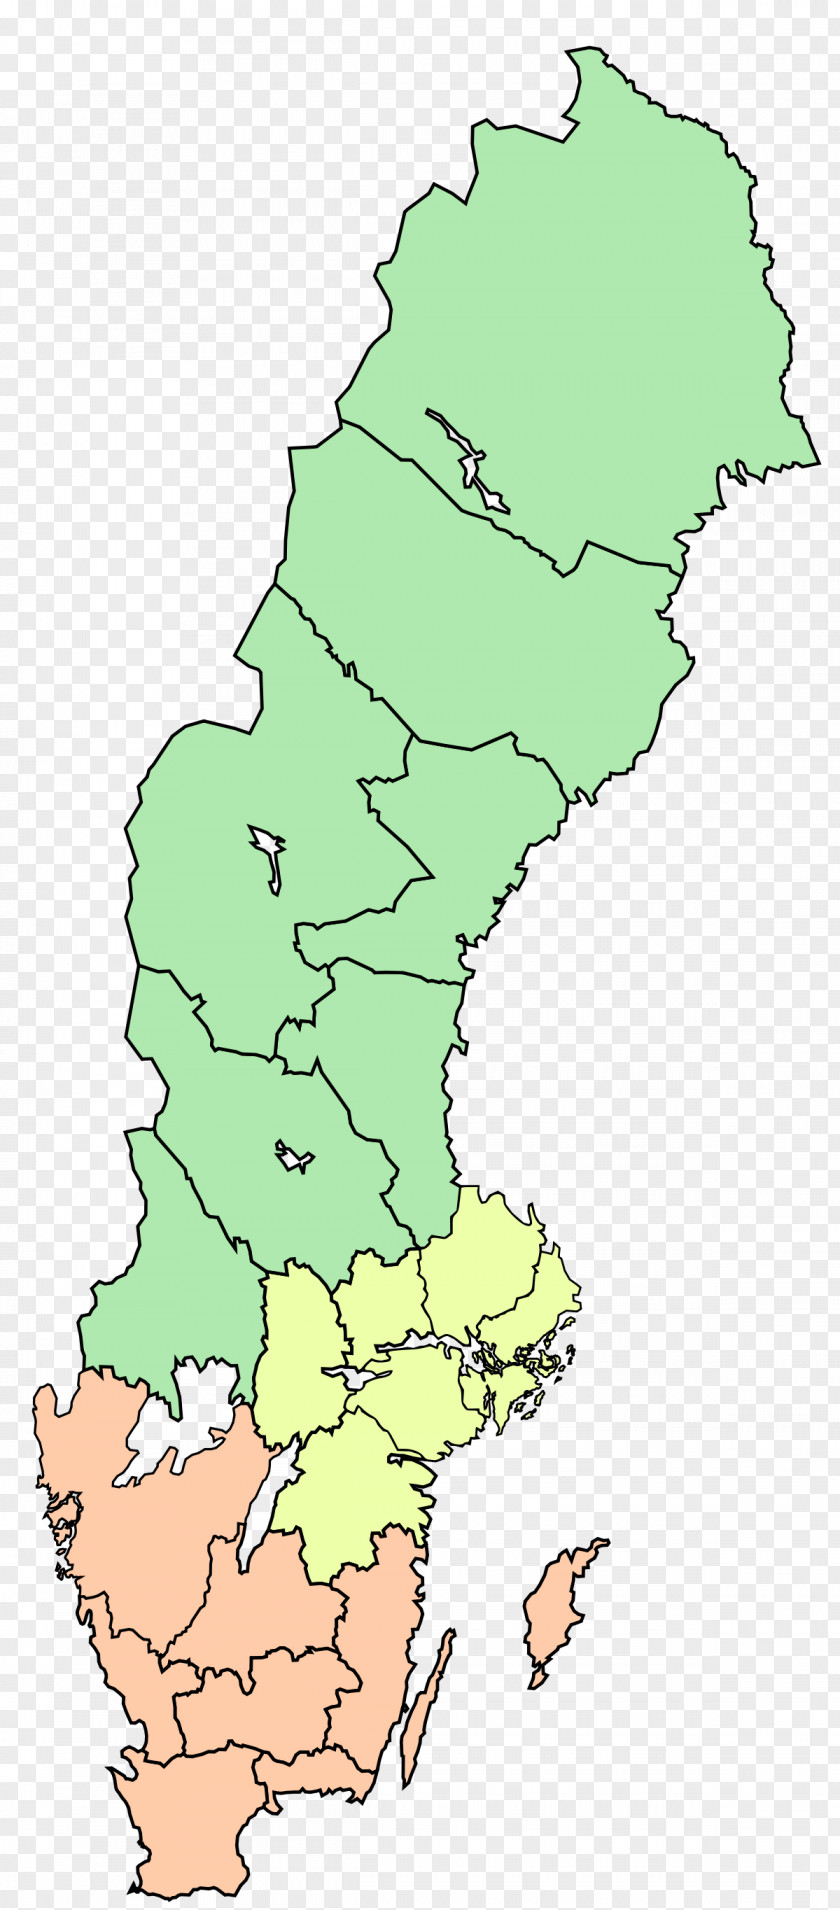 East Middle Sweden Lands Of NUTS Statistical Regions North PNG